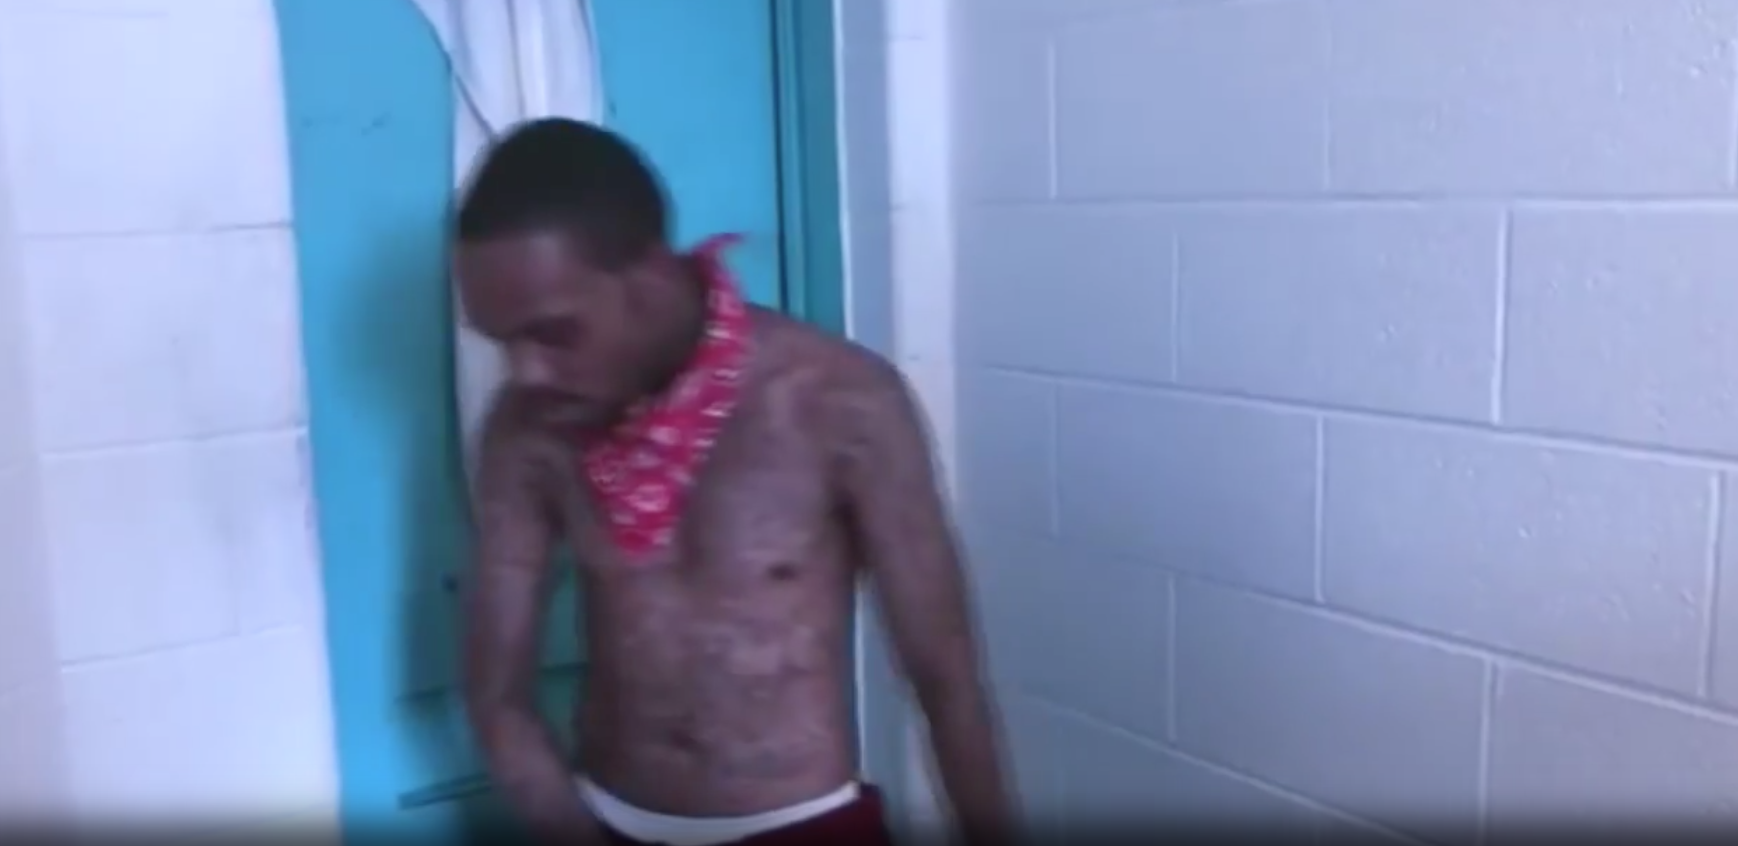 A rap video shot in a Michigan prison sparks investigation